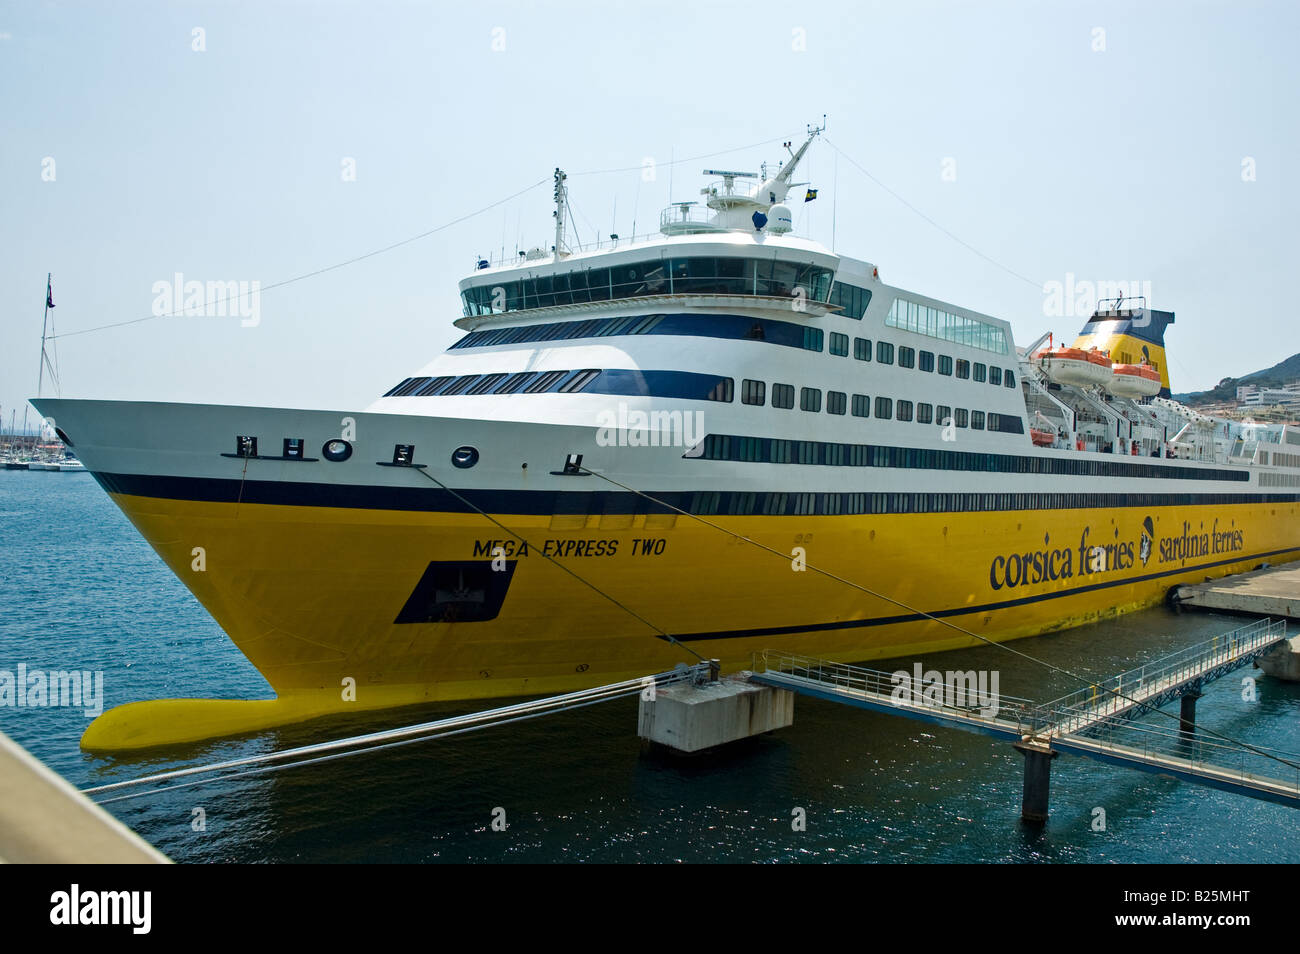 The yellow and white Corsica Sardinia Ferries ship Mega Express Two ...